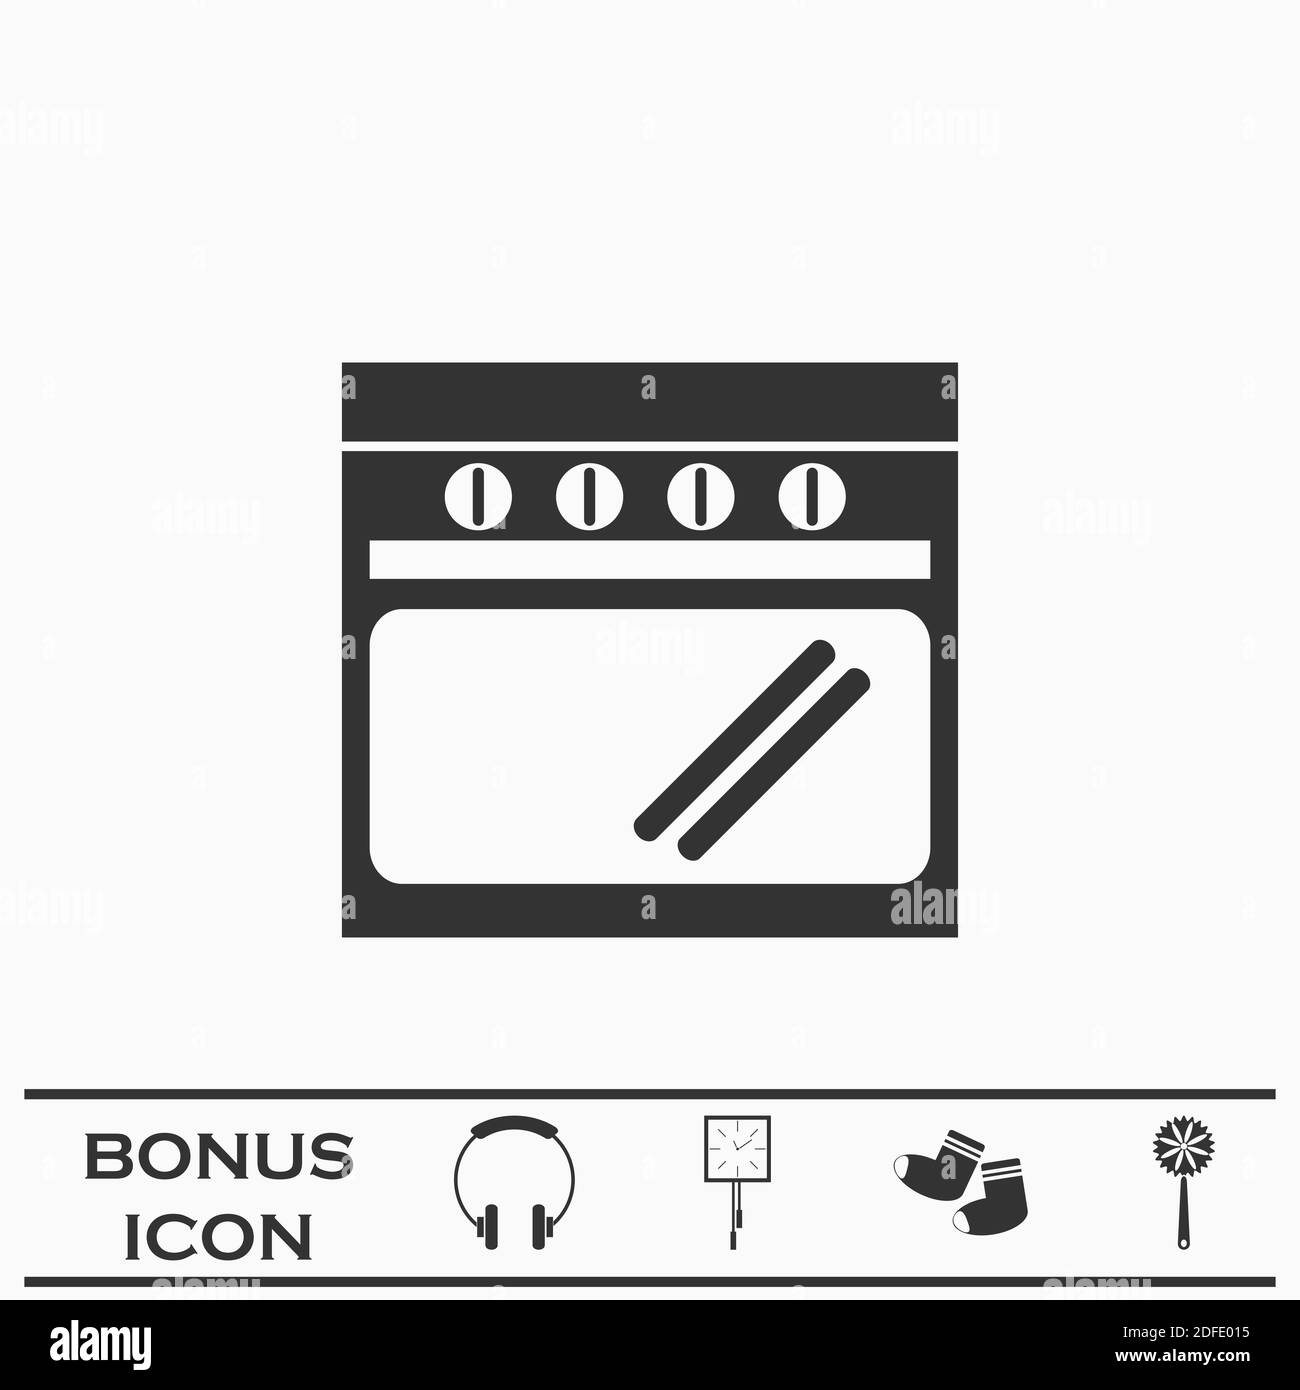 Oven icon flat. Black pictogram on white background. Vector illustration symbol and bonus button Stock Vector